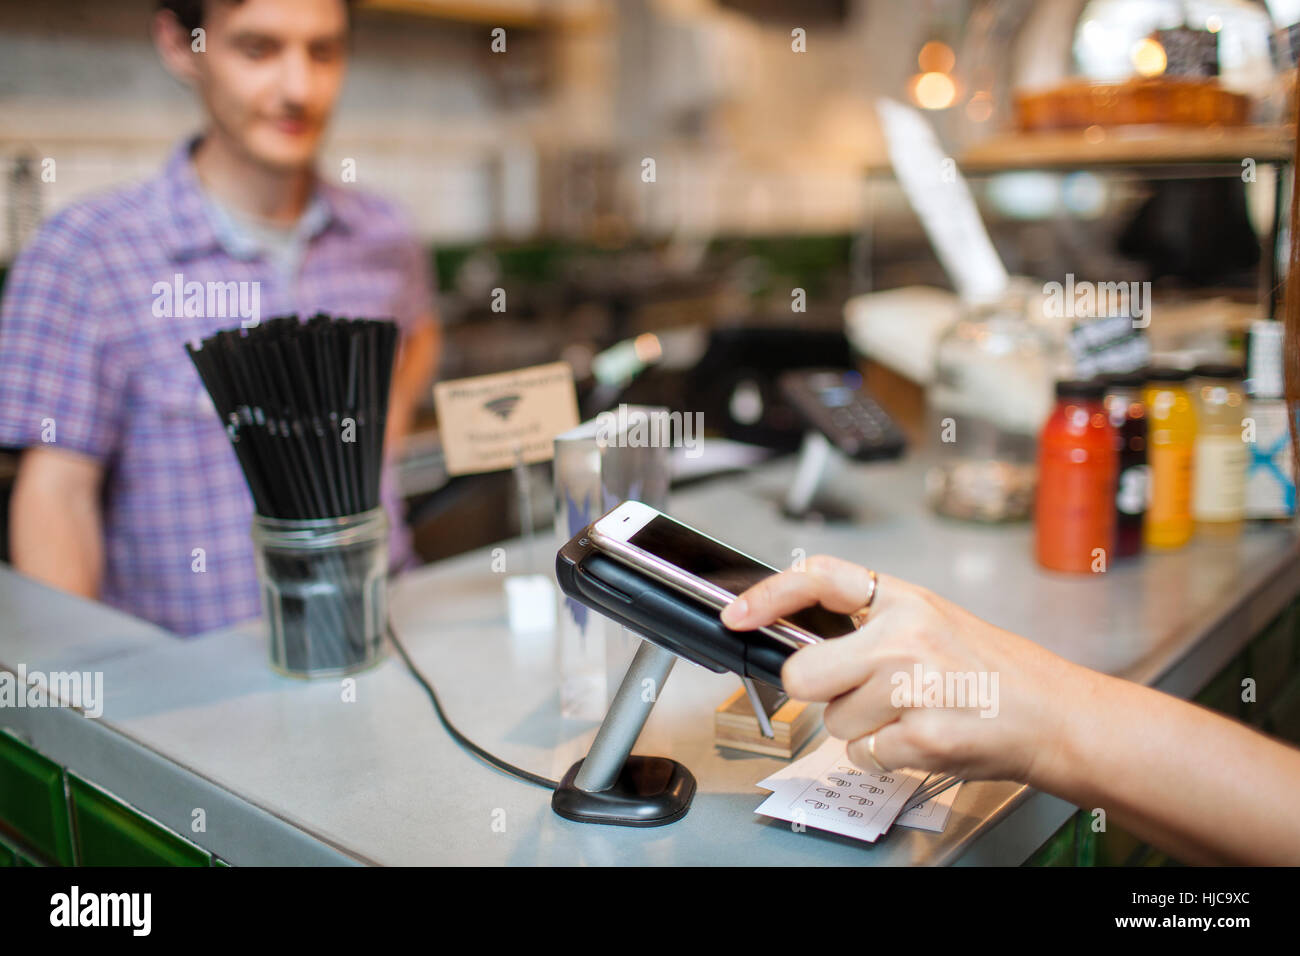 Cropped shot of female client utilisant le paiement sans contact smartphone in cafe Banque D'Images